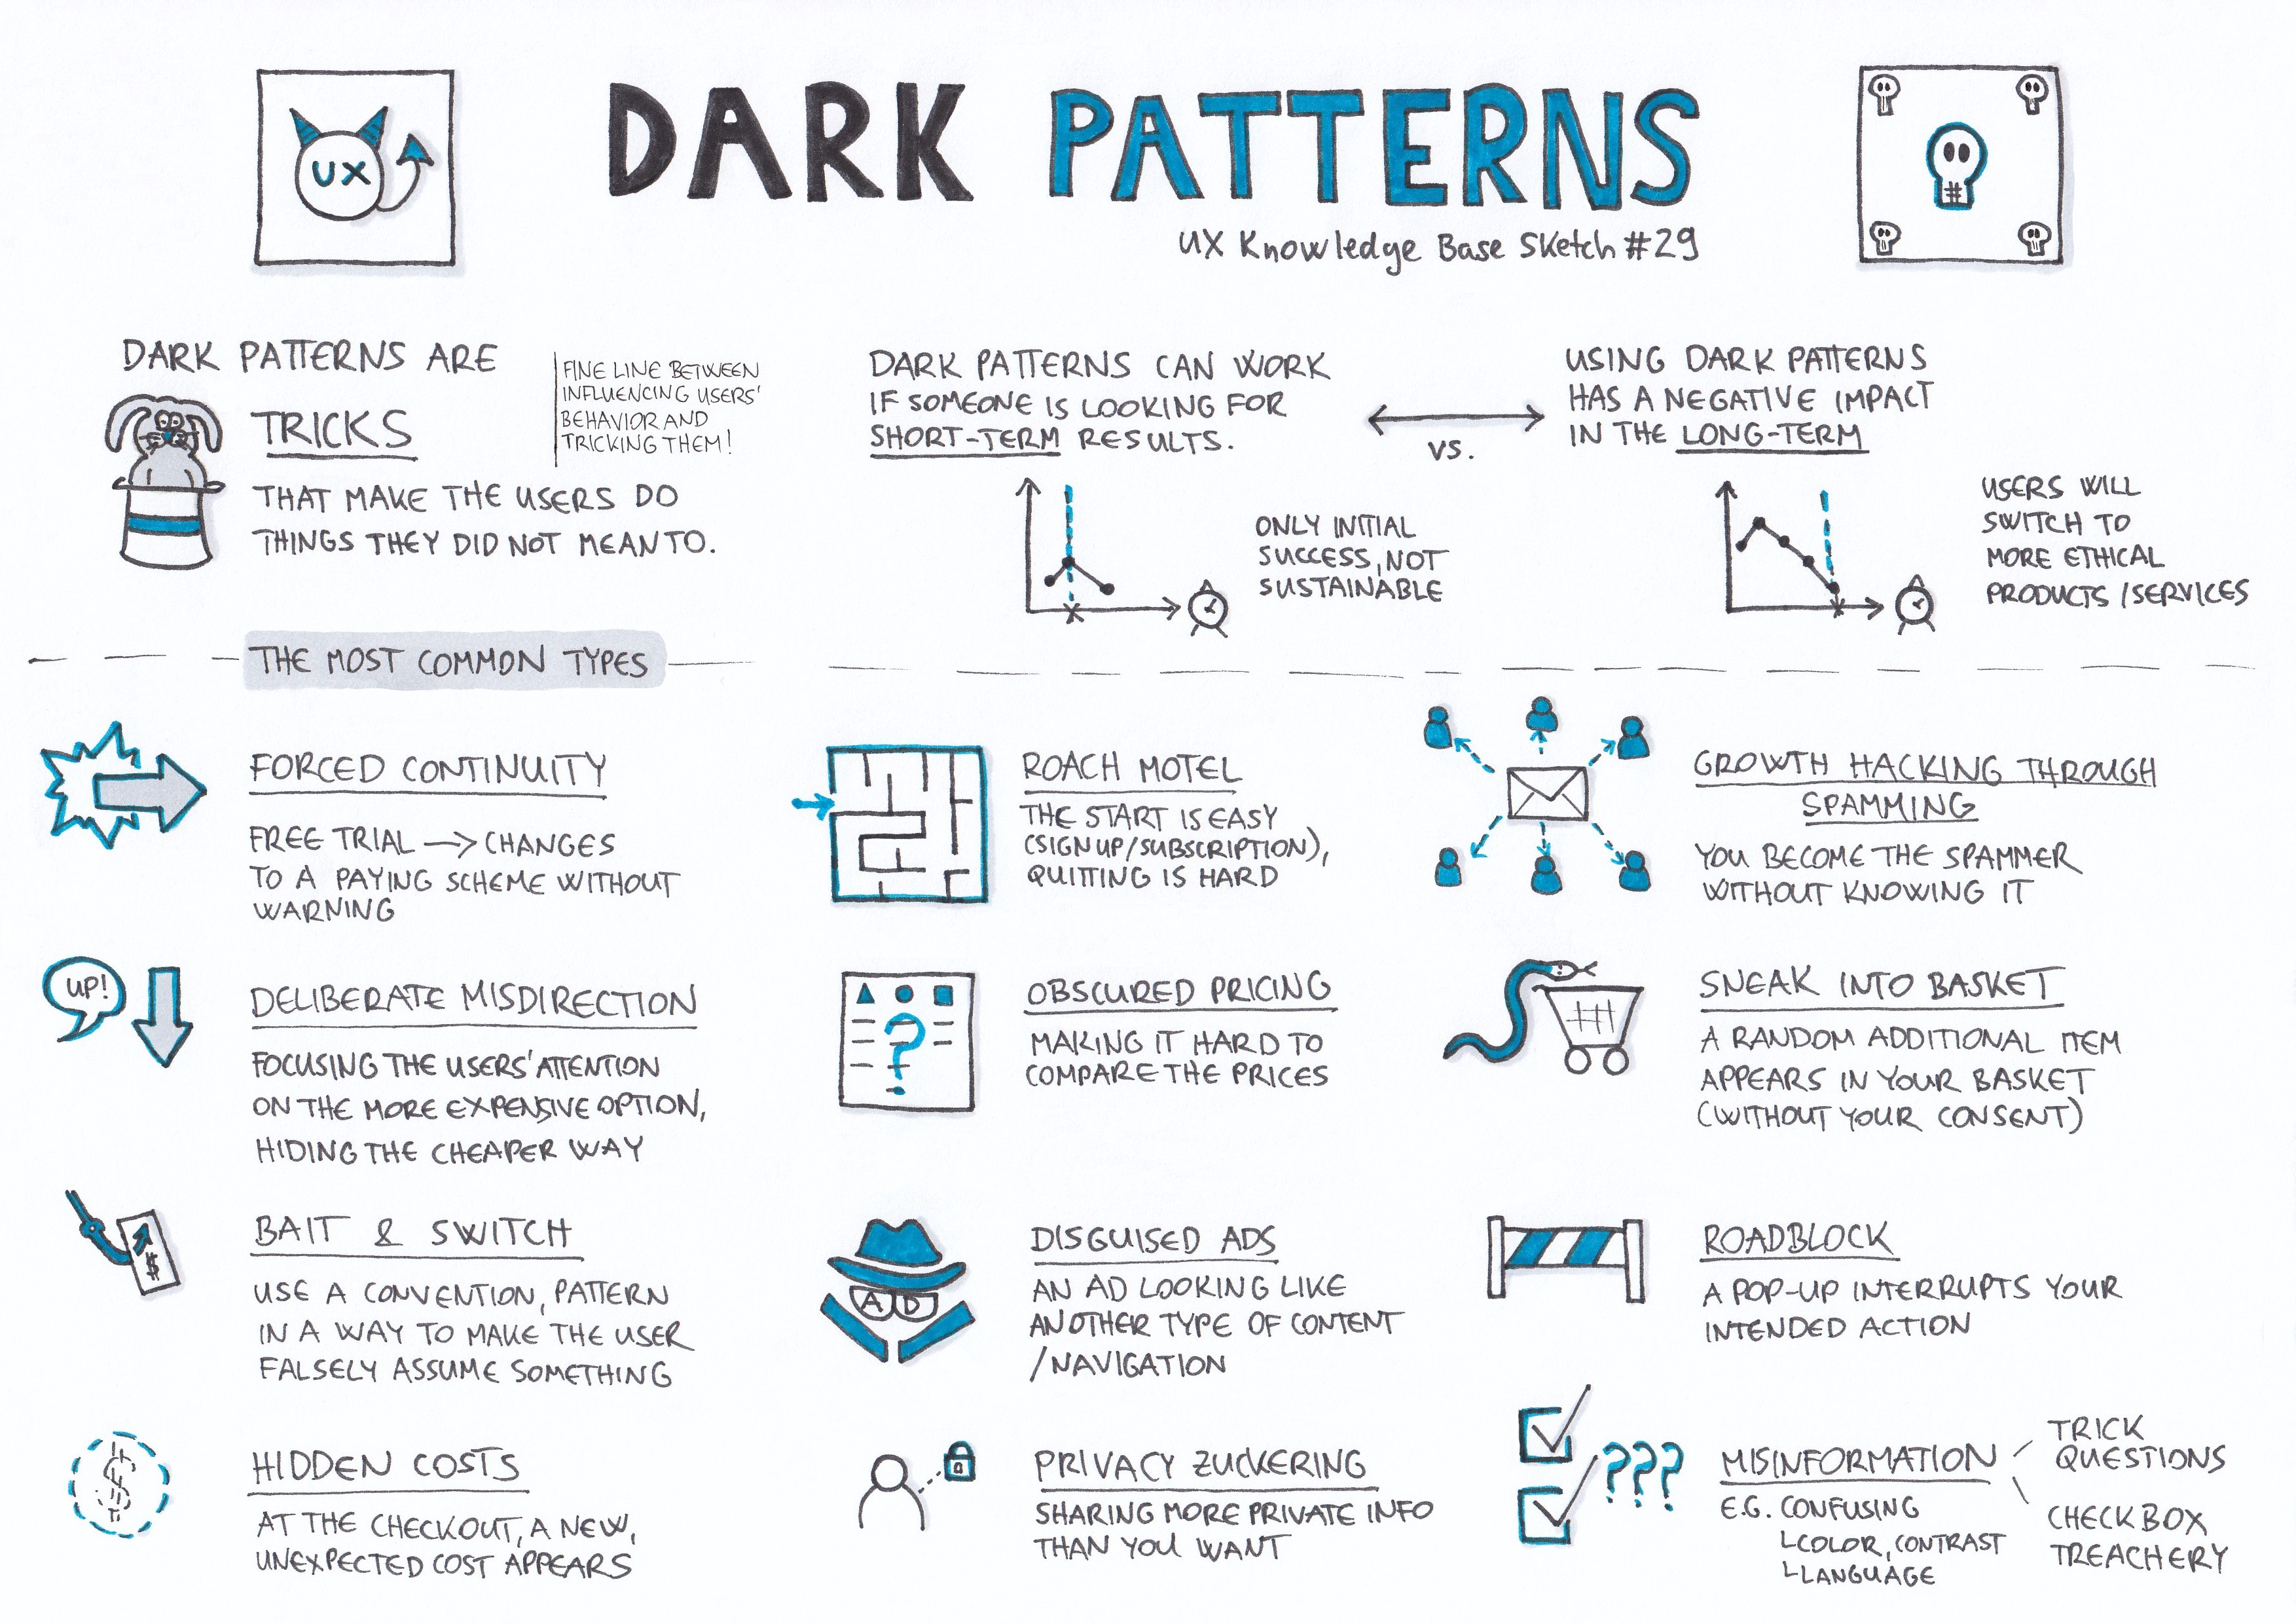 An overview on Dark patterns